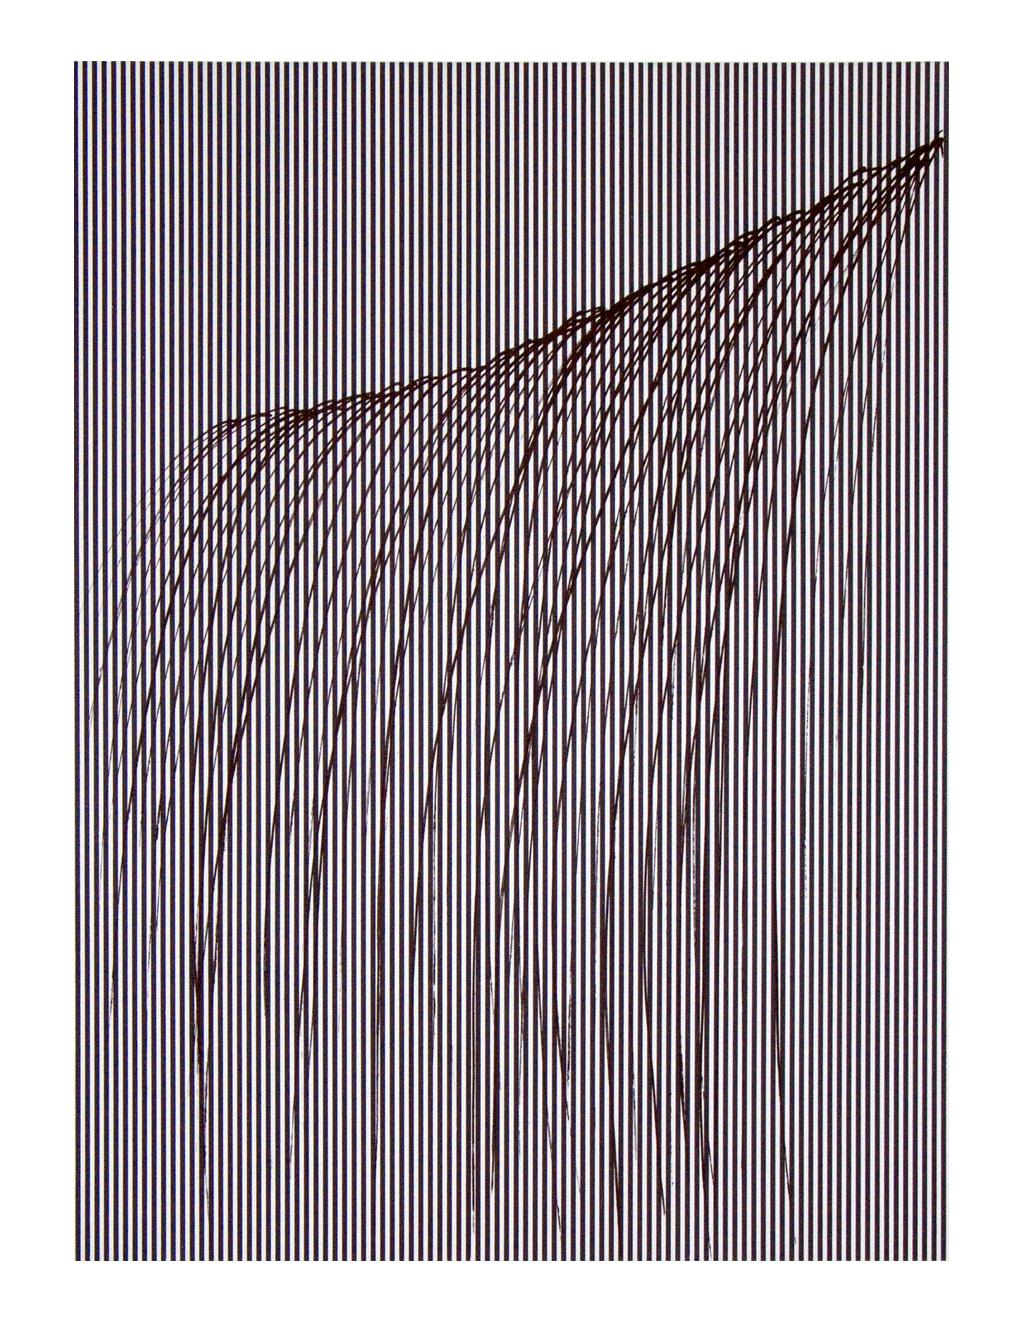 Tom Orr Abstract Print – Wasserfall II